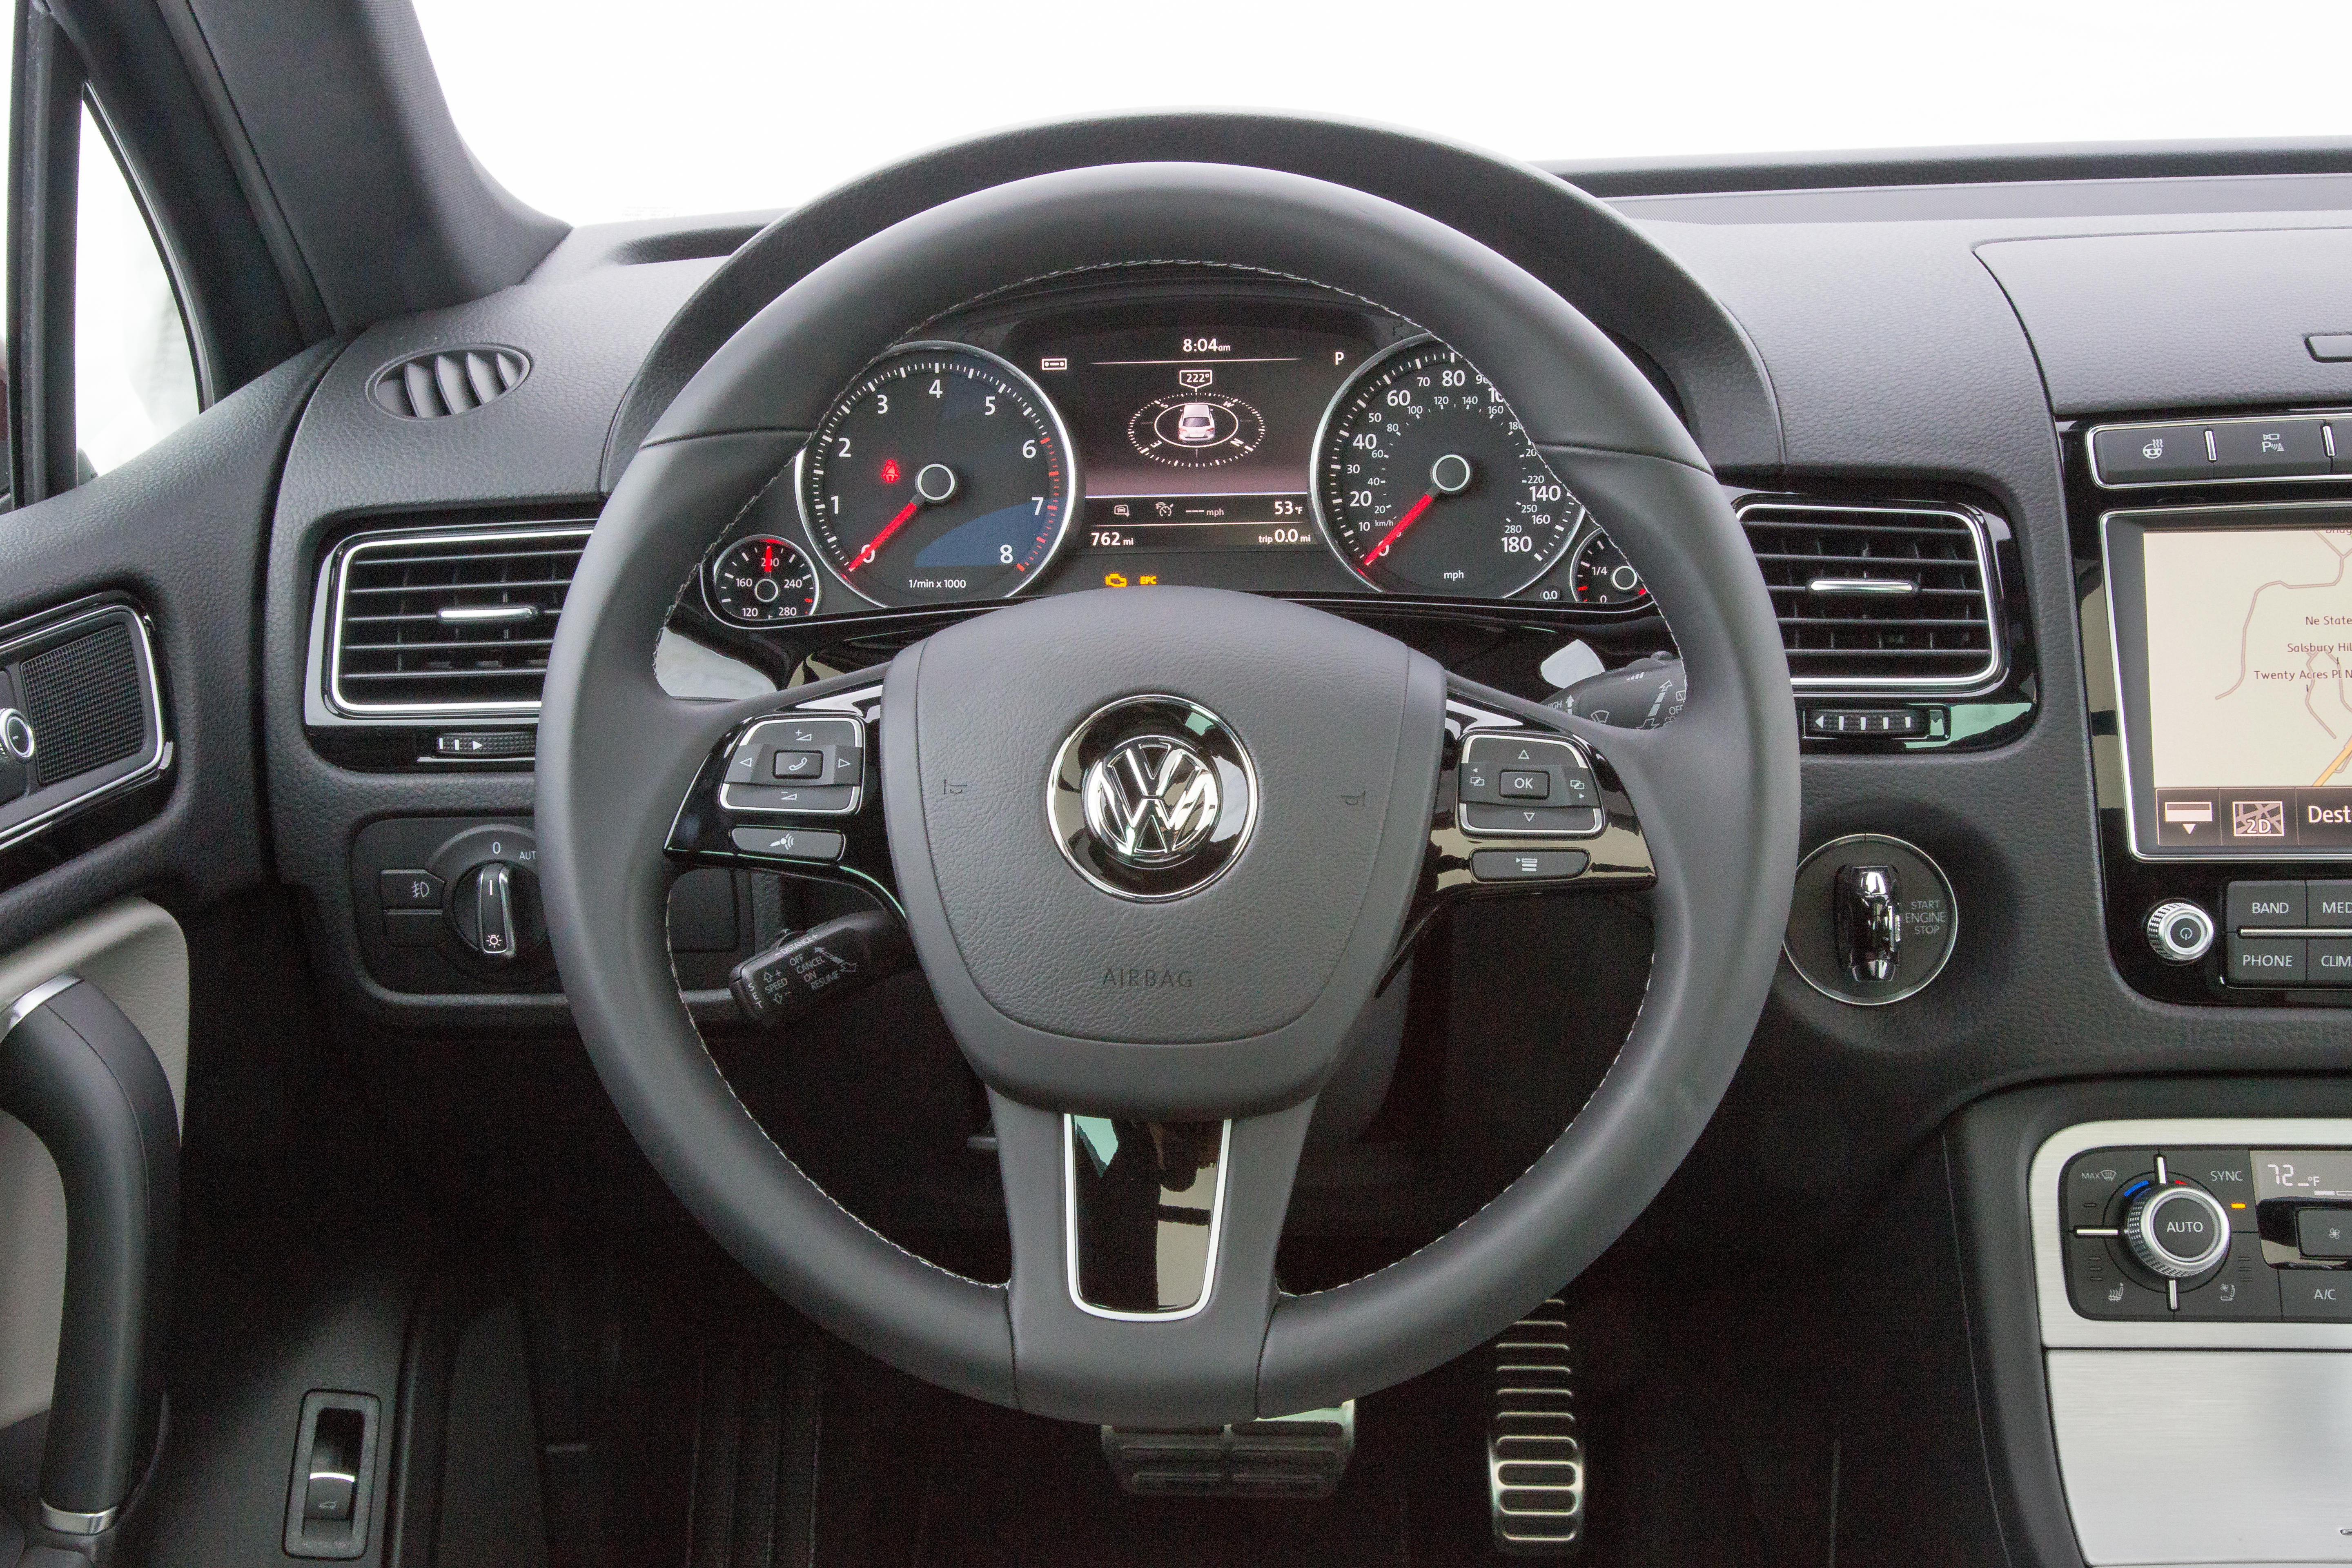 Used Volkswagen Touareg for Sale Huntersville NC - 2018 Volkswagen Touareg's Interior